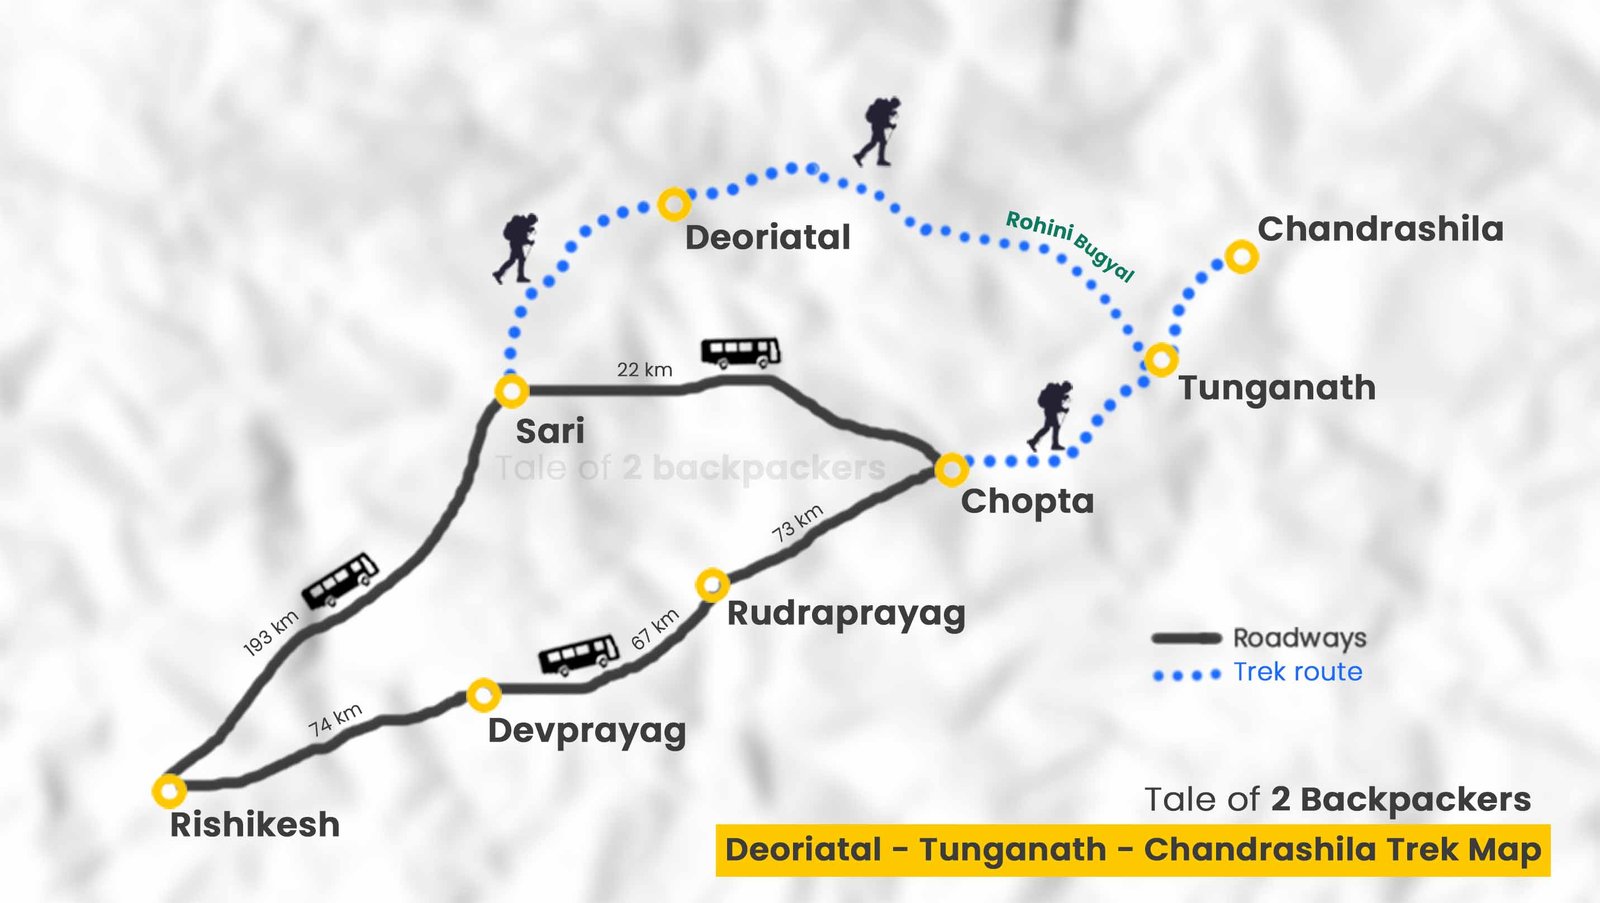 deoriatal chandrashila trek map